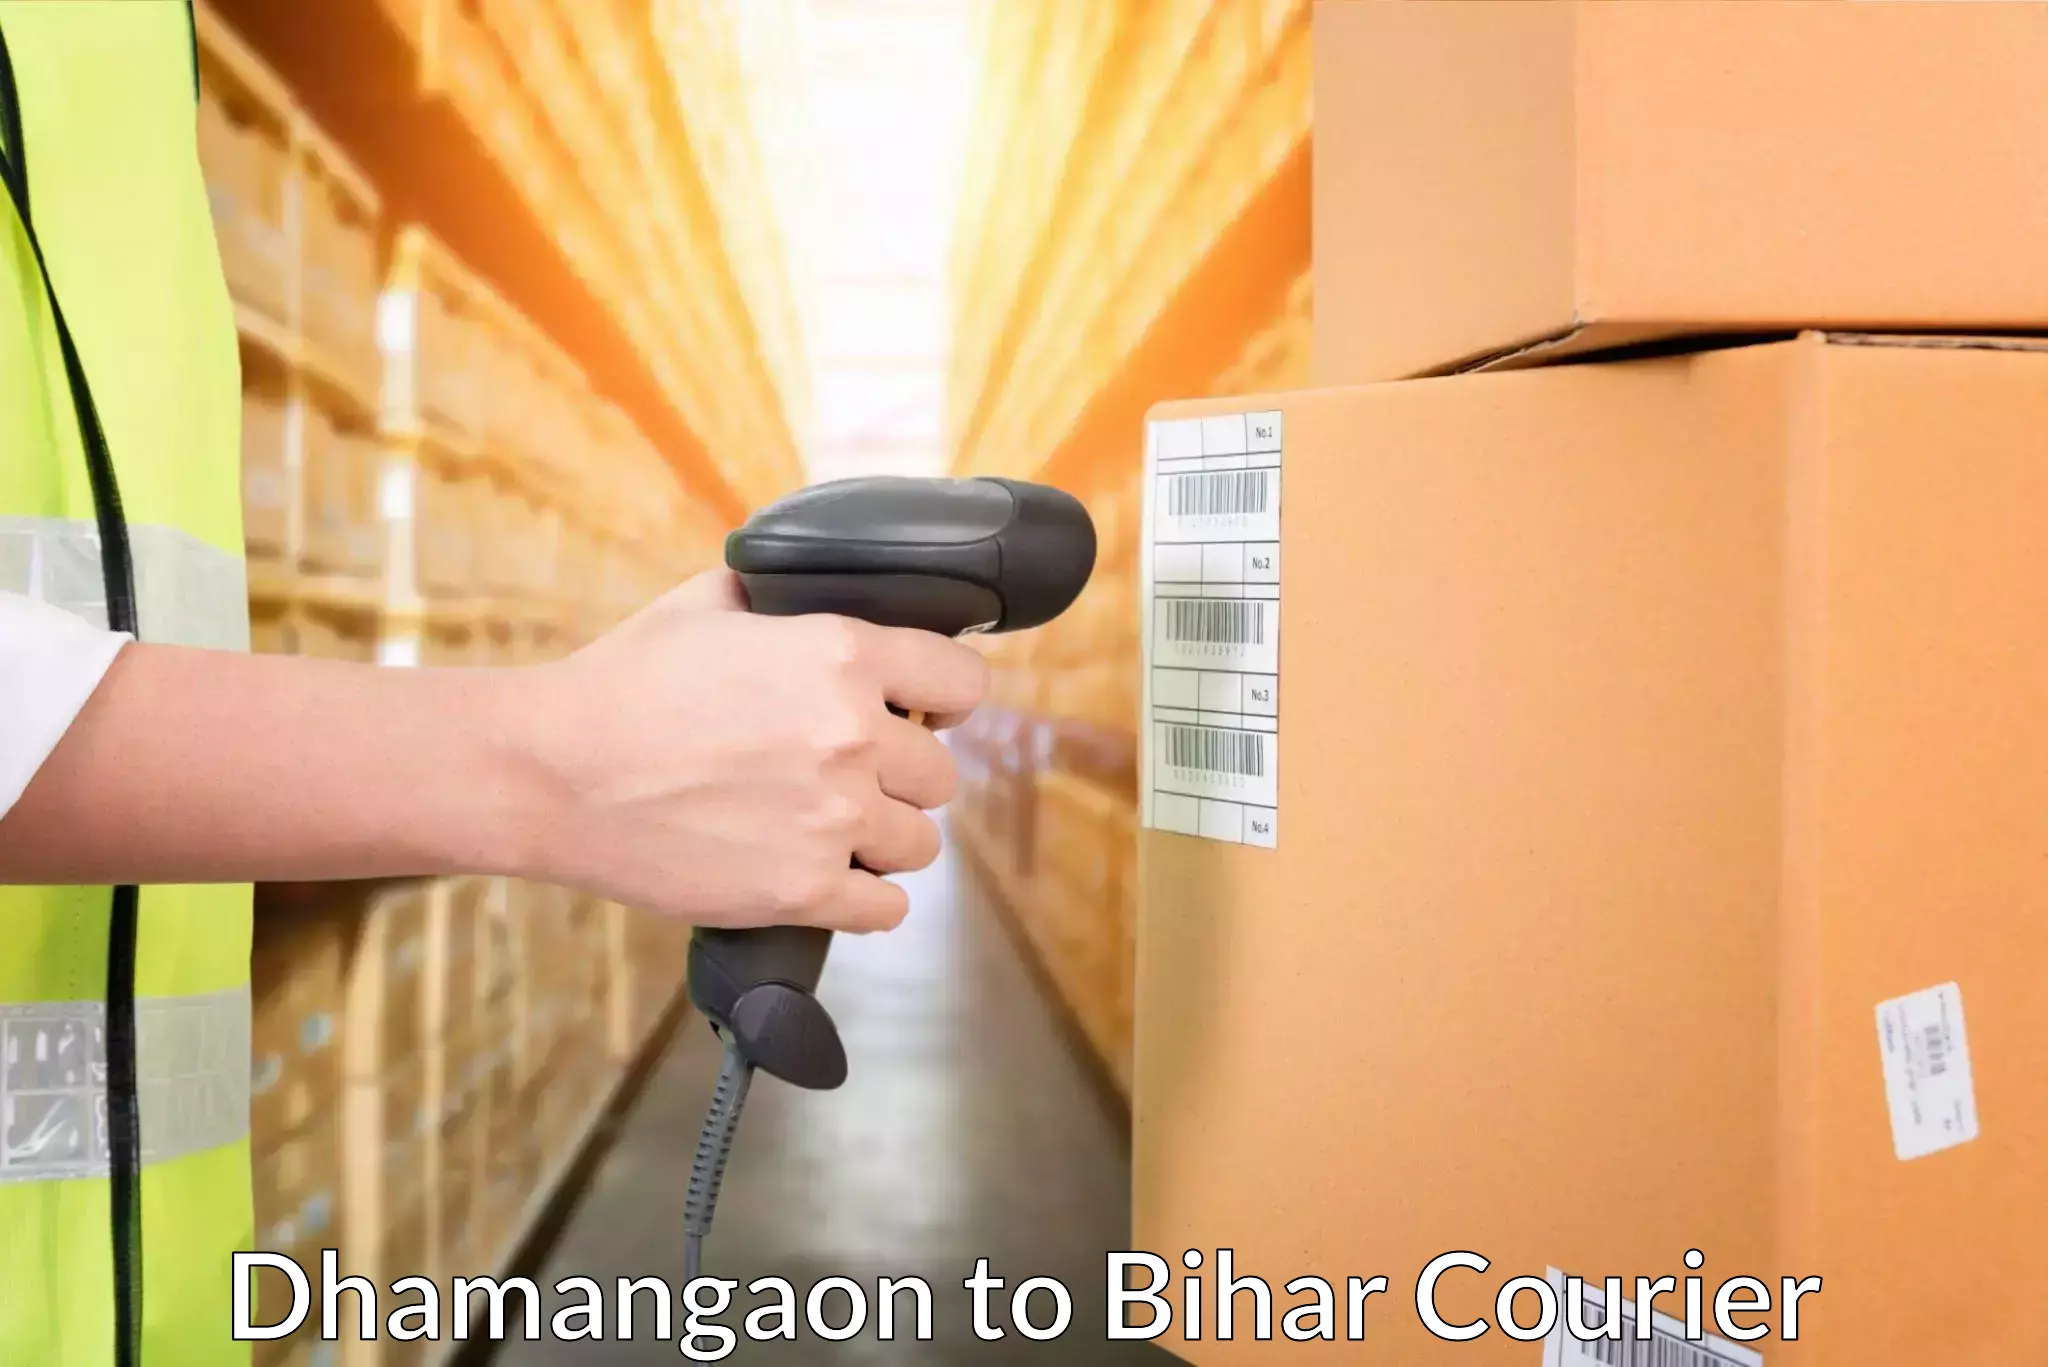 Global logistics network Dhamangaon to Bihar